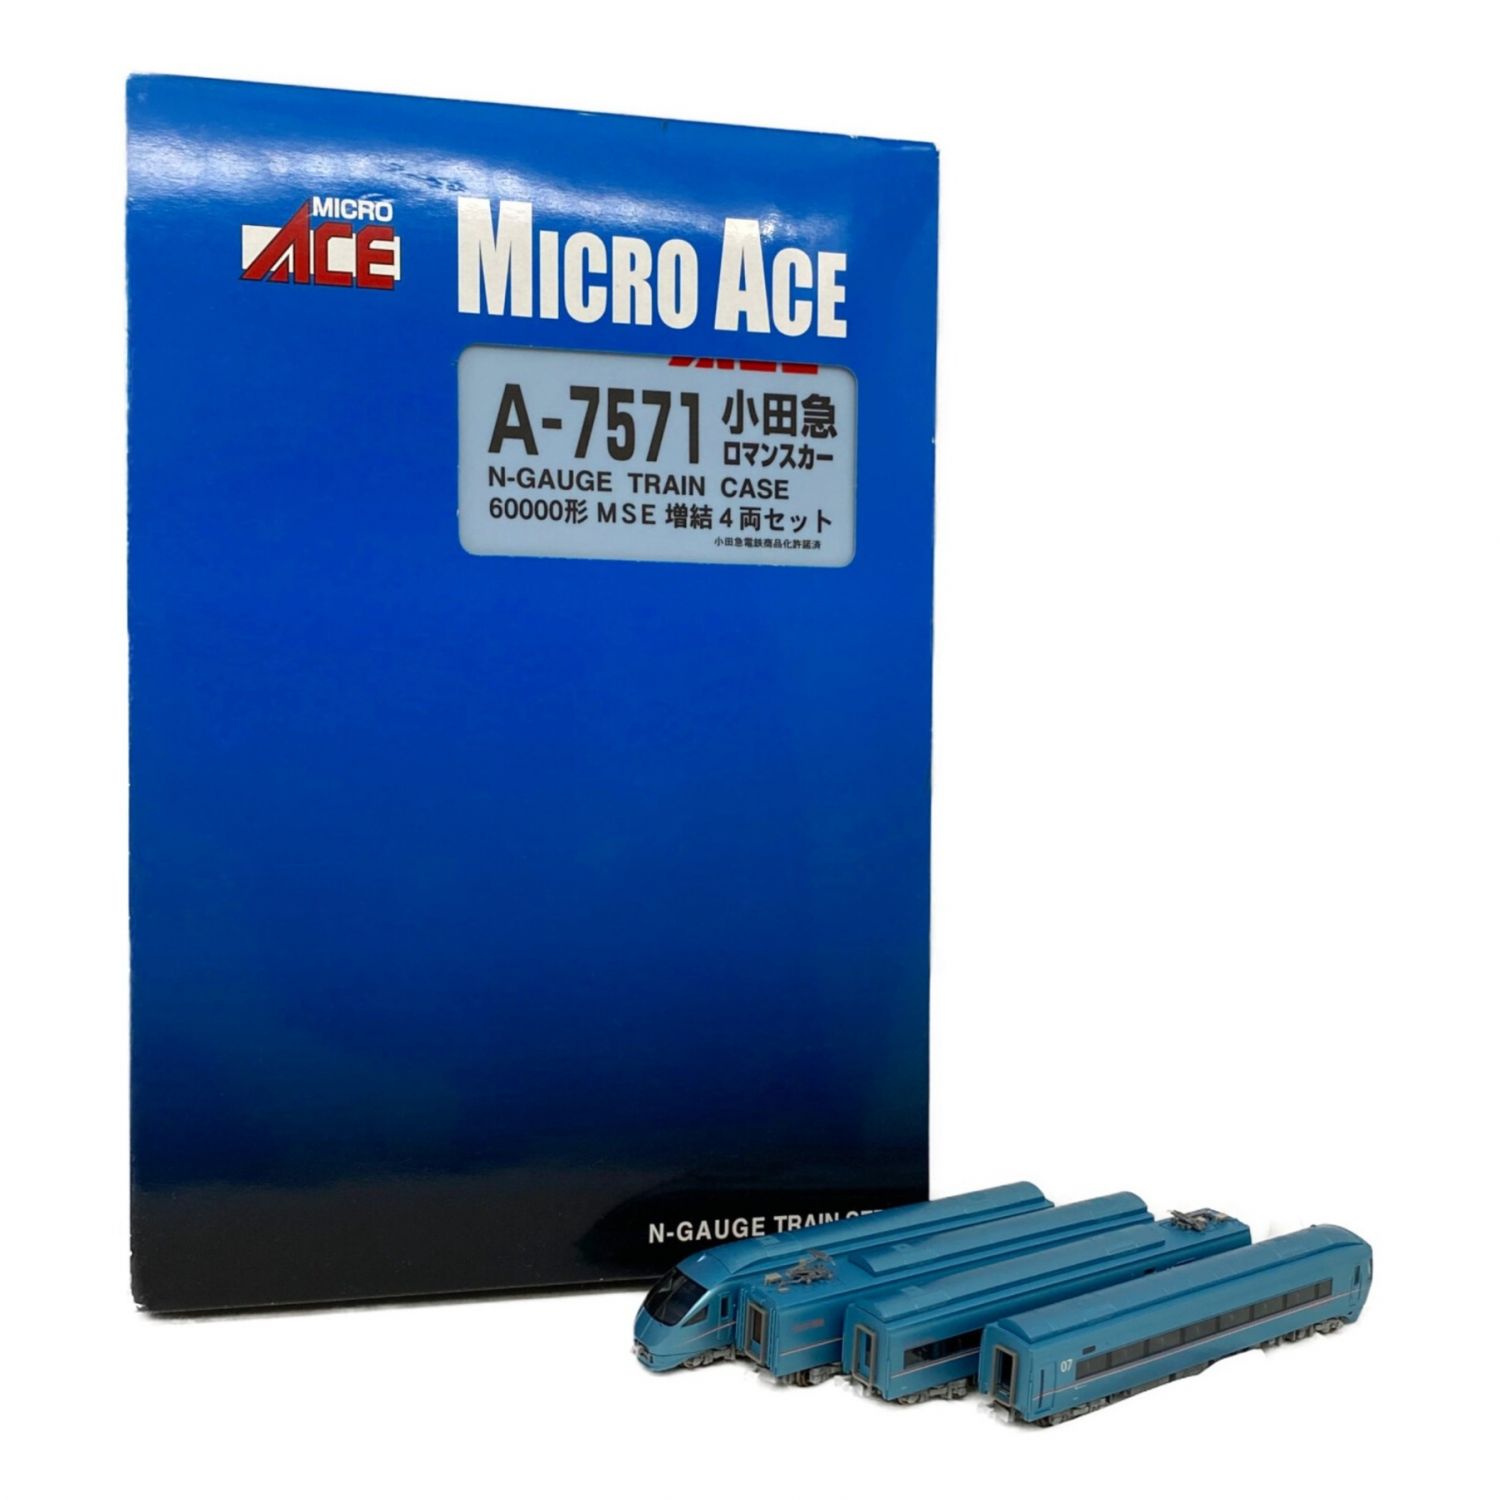 MICRO ACE (マイクロエース) Nゲージ 小田急ロマンスカー 60000形 MSE